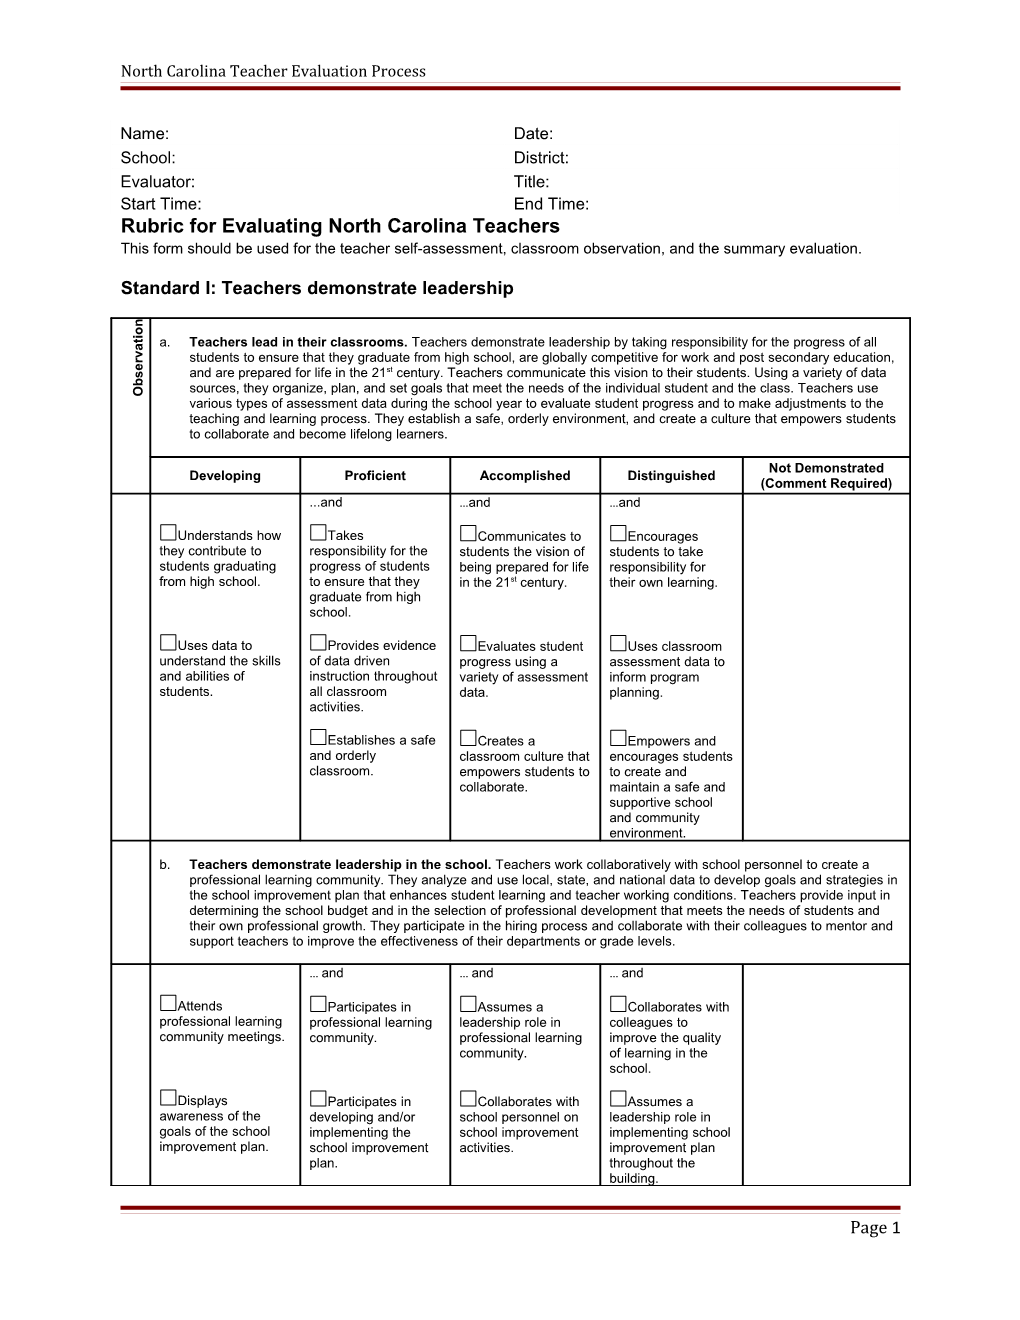 North Carolina Teacher Evaluation Process s1